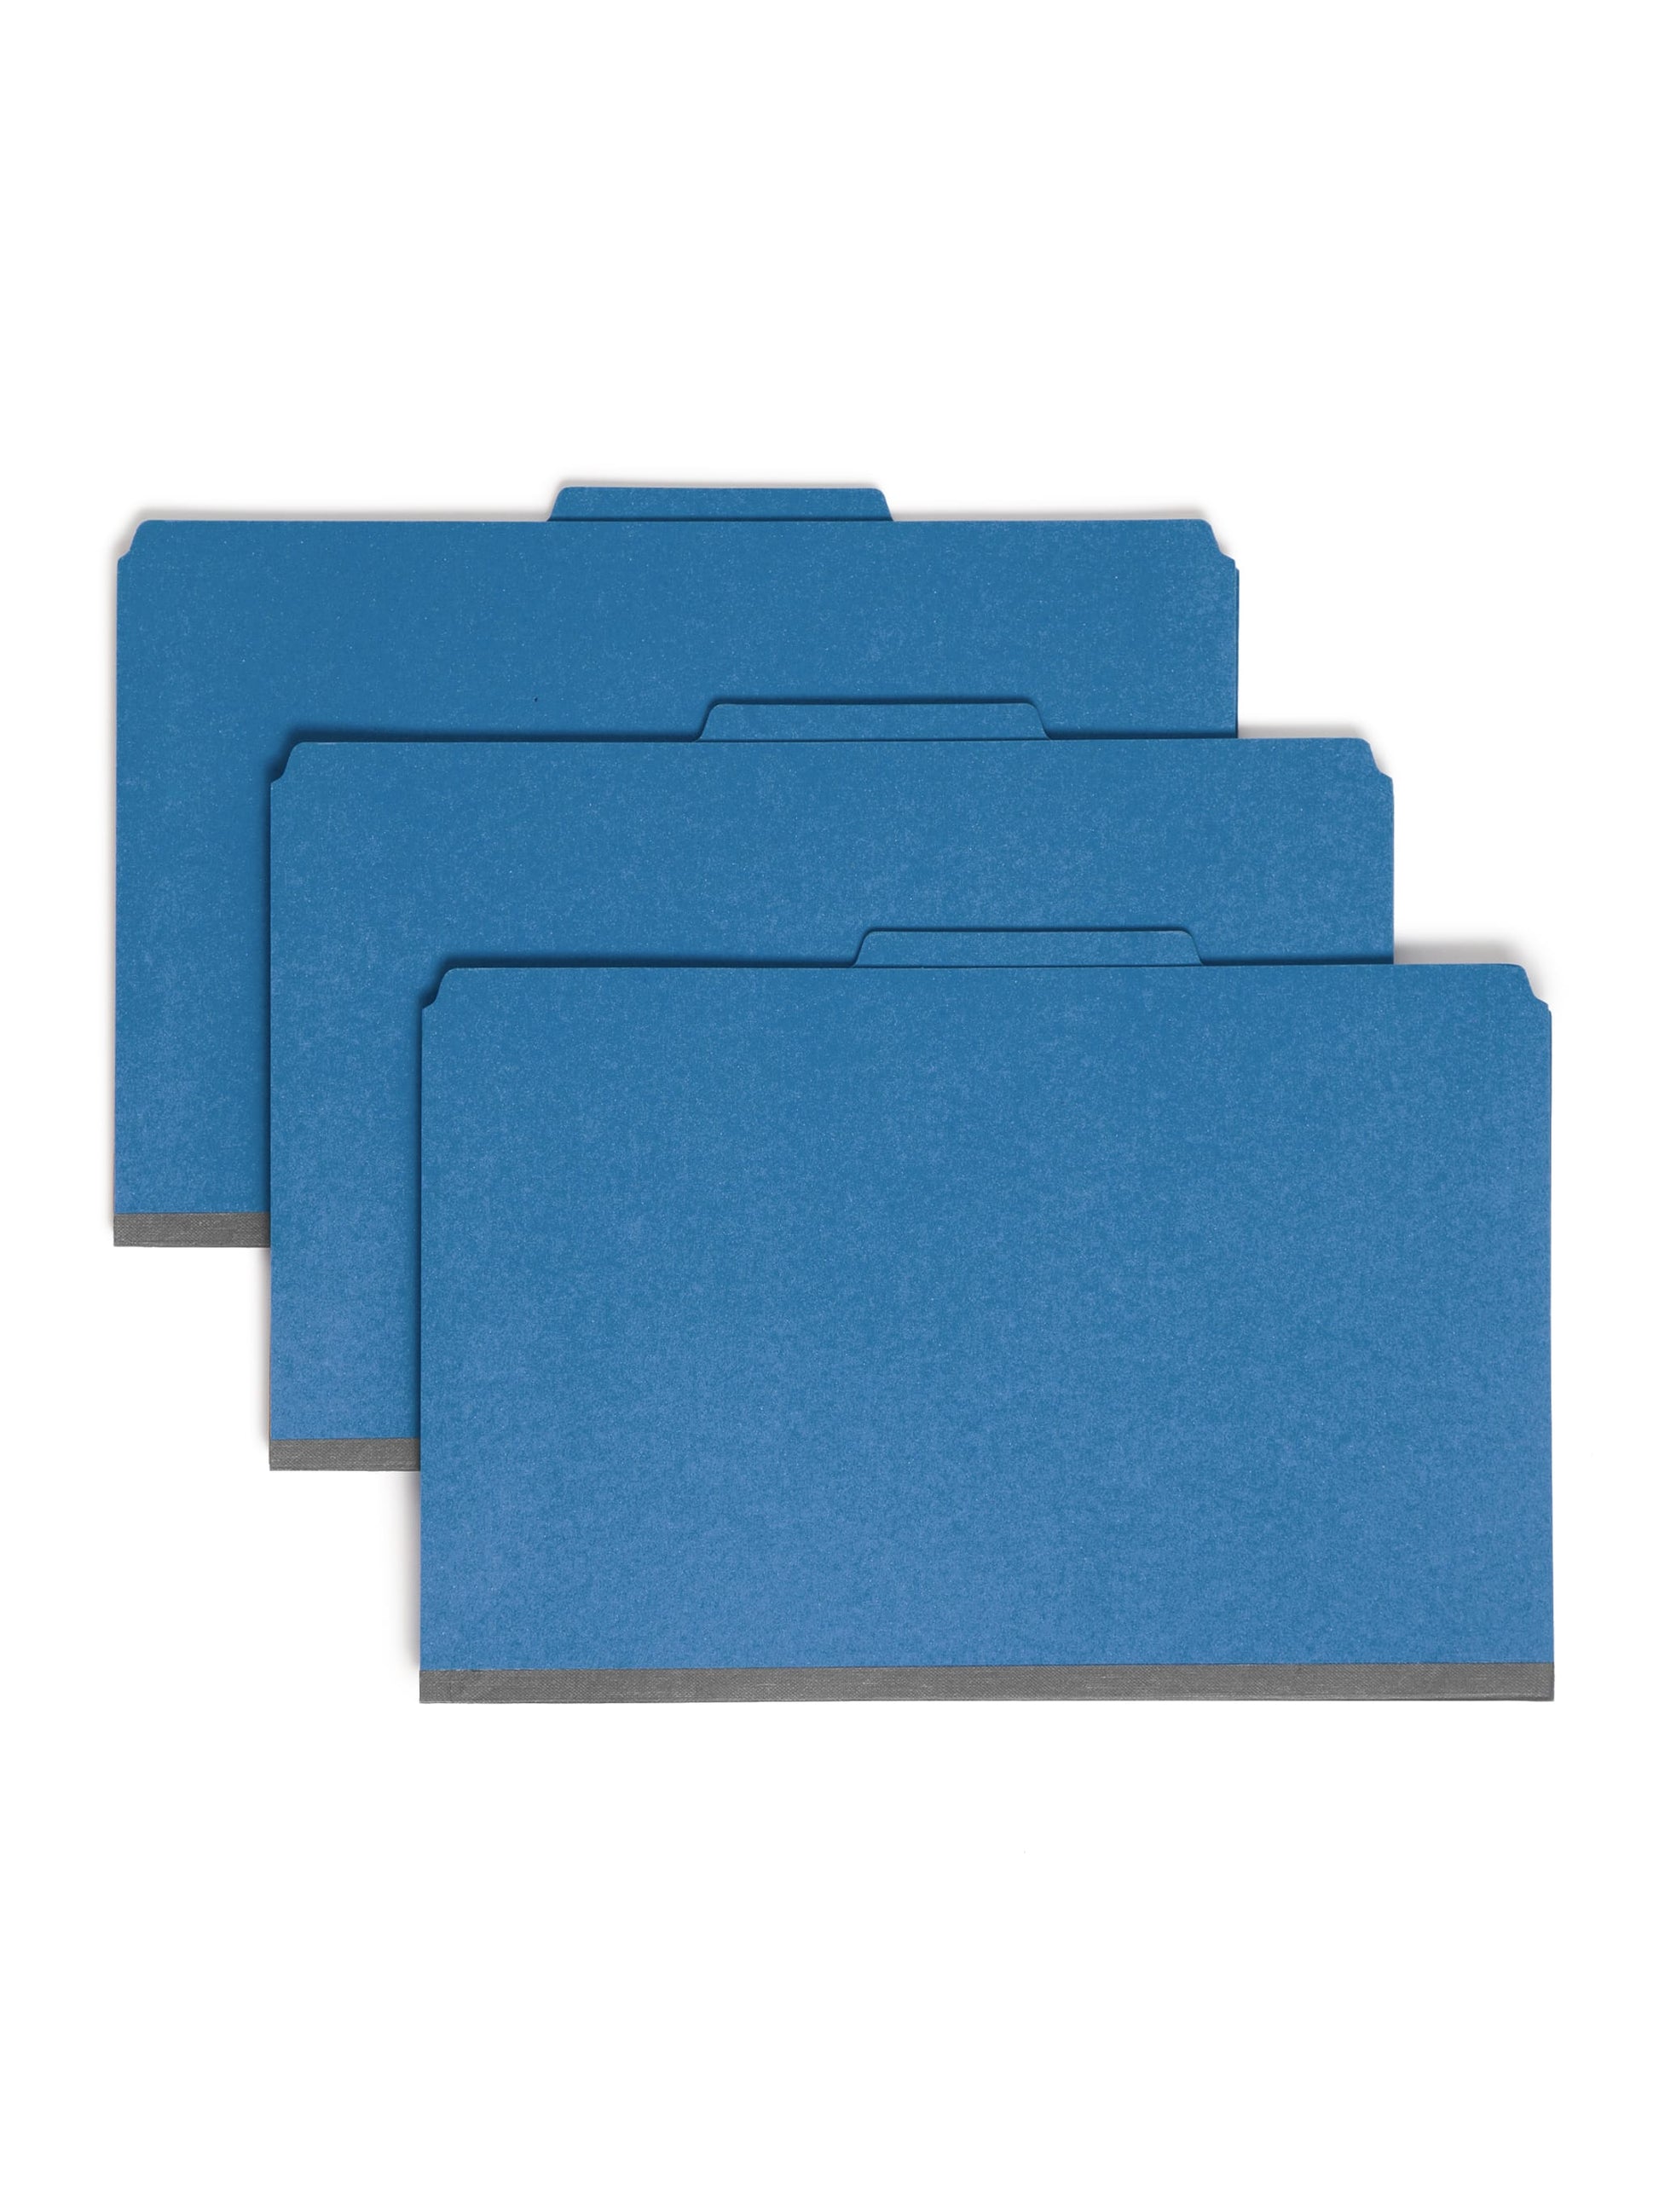 SafeSHIELD® Pressboard Classification File Folders with Pocket Dividers, Dark Blue Color, Legal Size, 